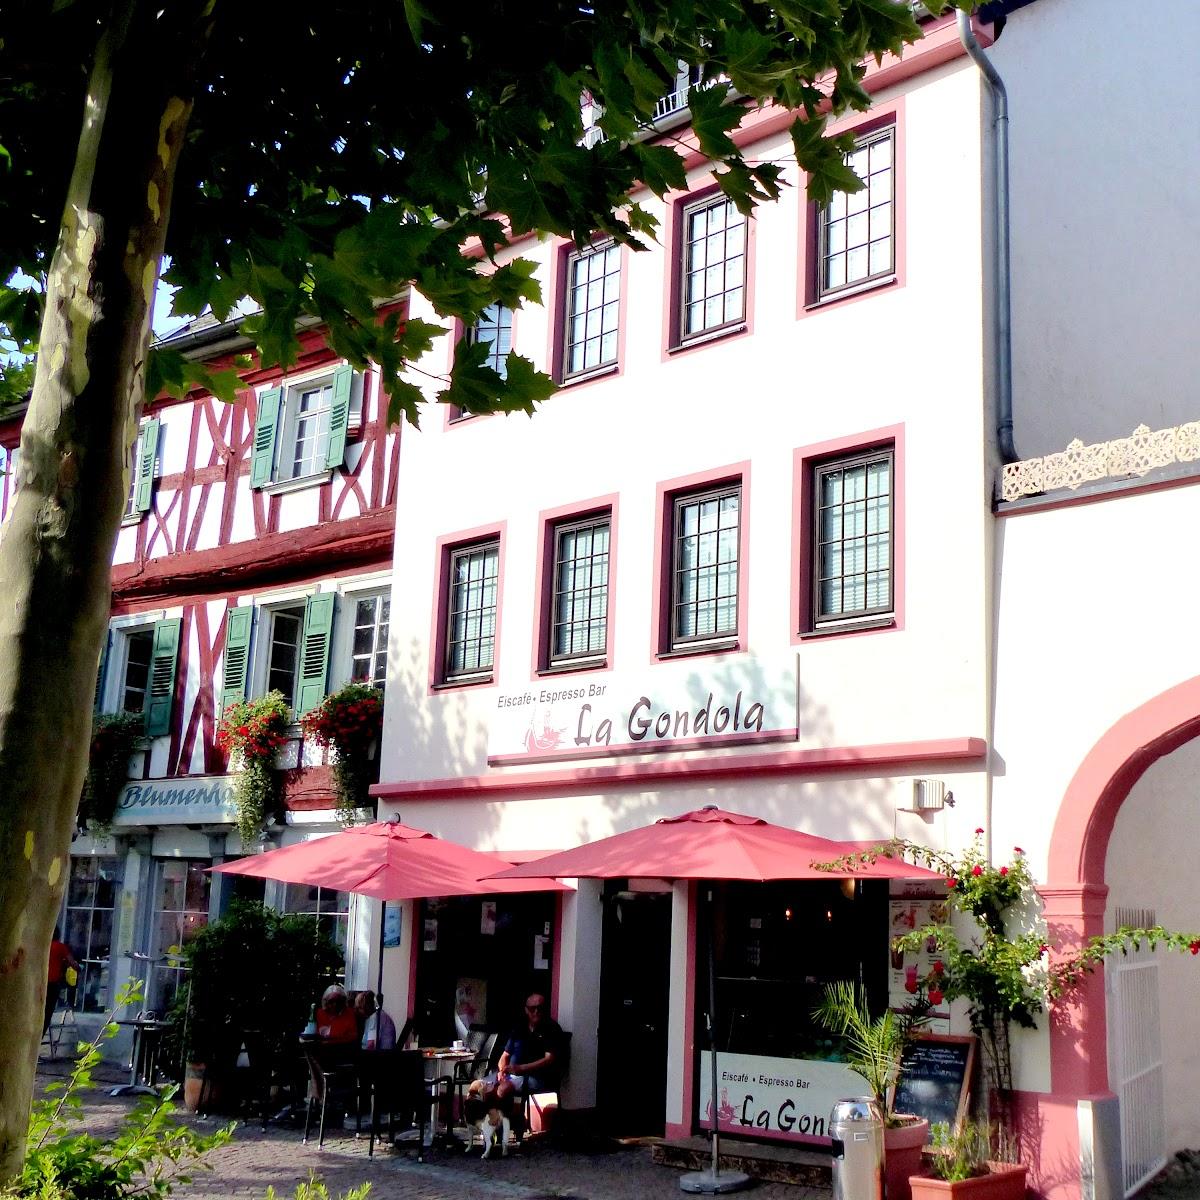 Restaurant "Eiscafe La Gondola" in Bad Sobernheim